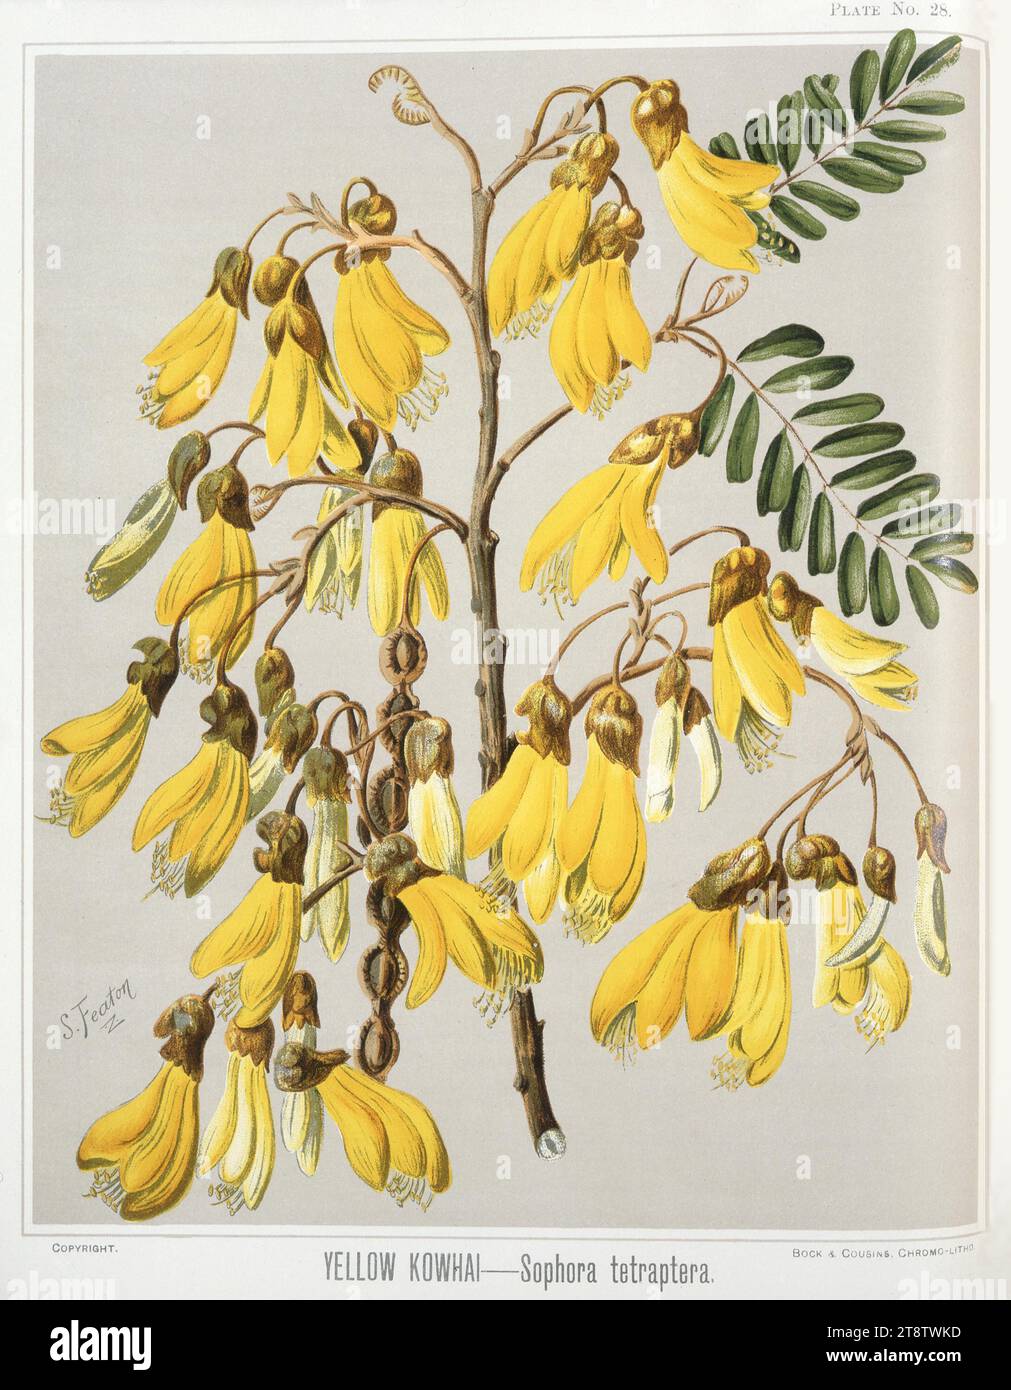 Featon, Sarah Anne, 1848-1927: Yellow kowhai. Sophora tetraptera. Bock and Cousins Chromo-Litho. Wellington, New Zealand, 1889, A branch of kowhai in flower Stock Photo